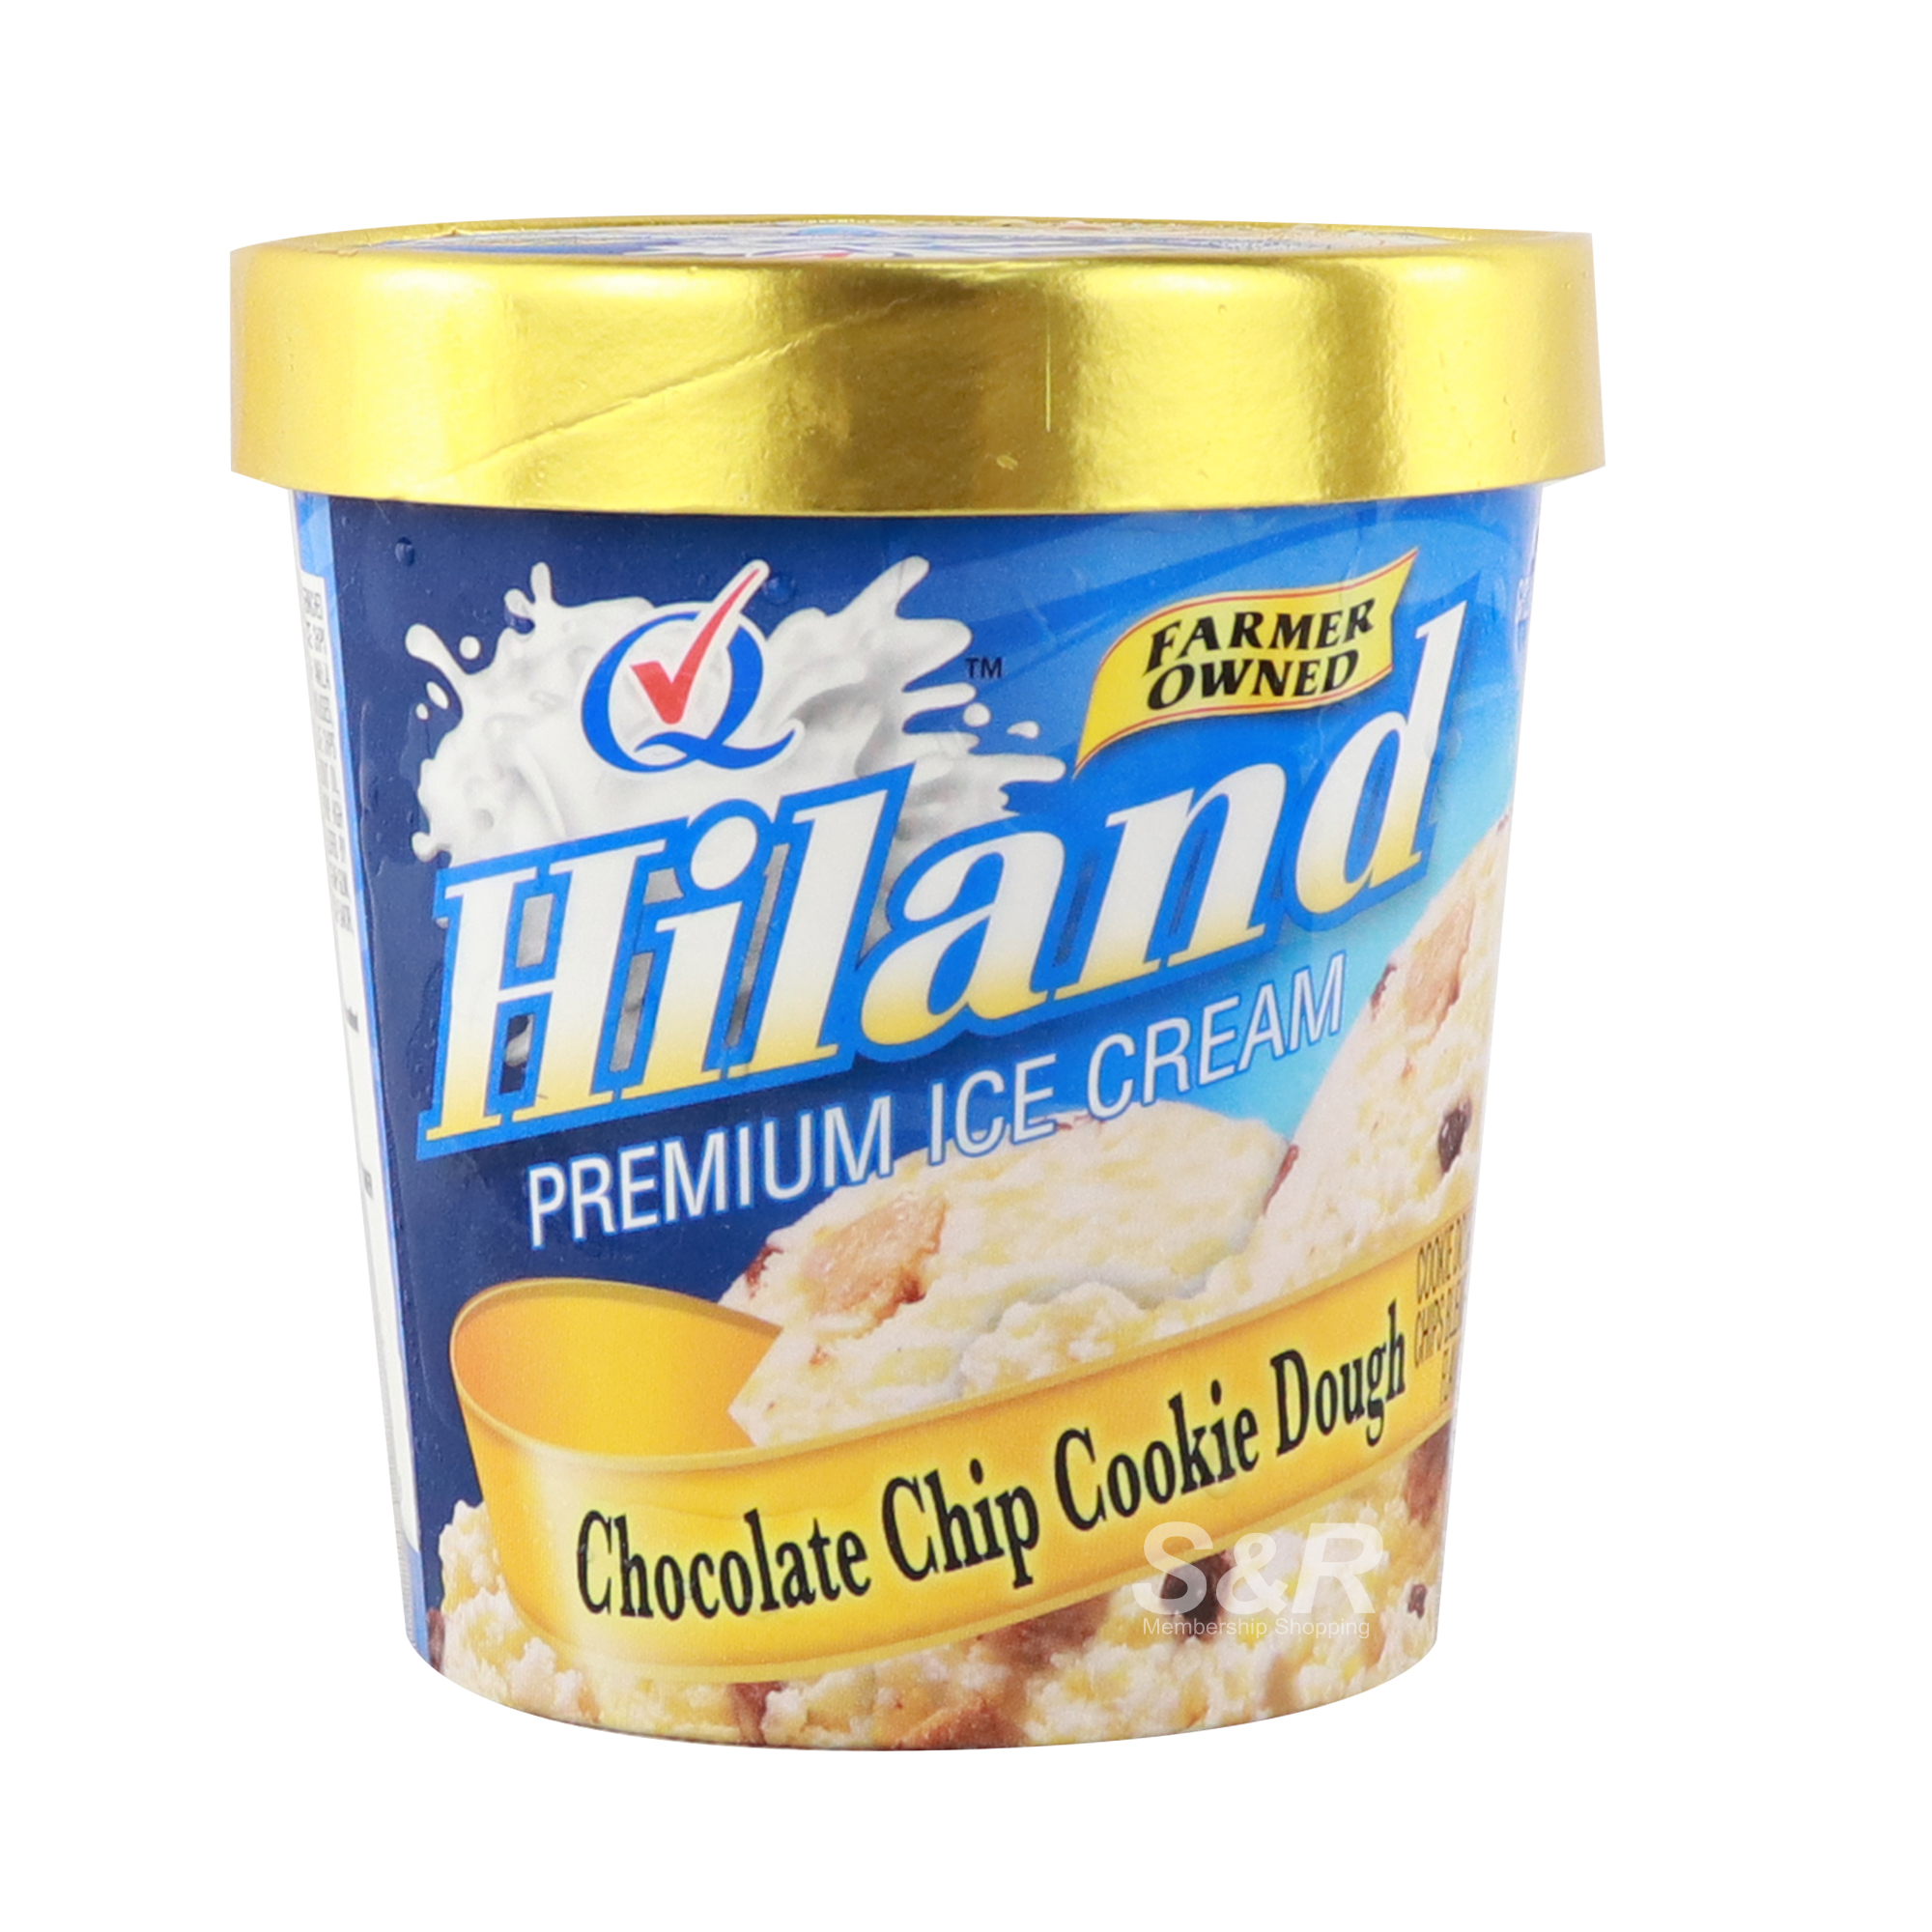 Hiland Premium Ice Cream Chocolate Chip and Cookie Dough Flavor 473mL